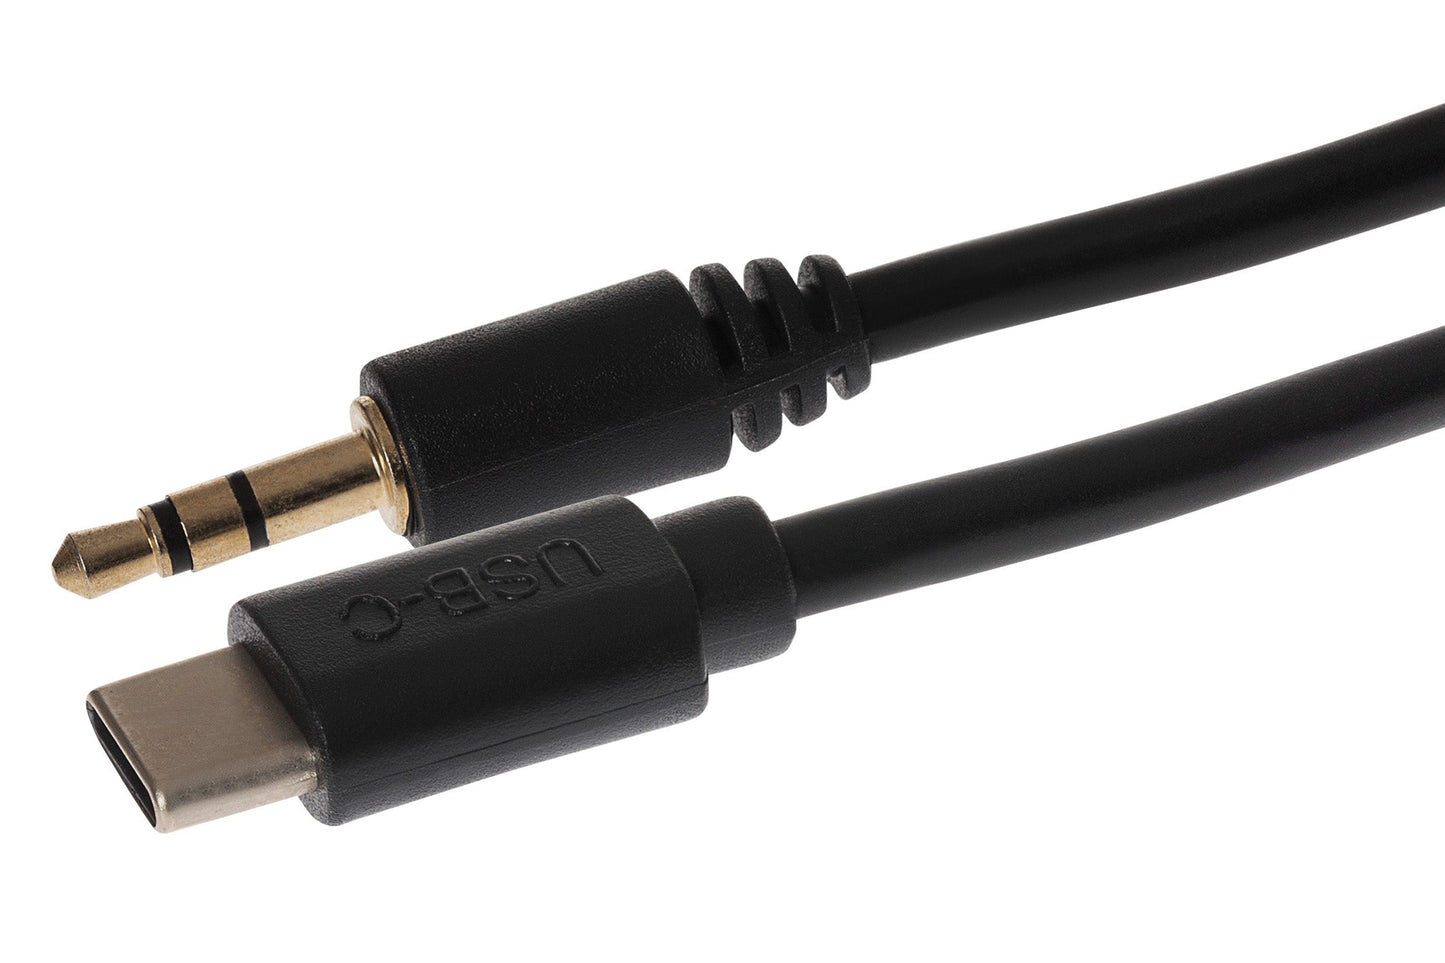 Maplin USB-C to 3.5mm Aux Stereo 3-Pole Jack Plug Cable - Black, 2m - maplin.co.uk